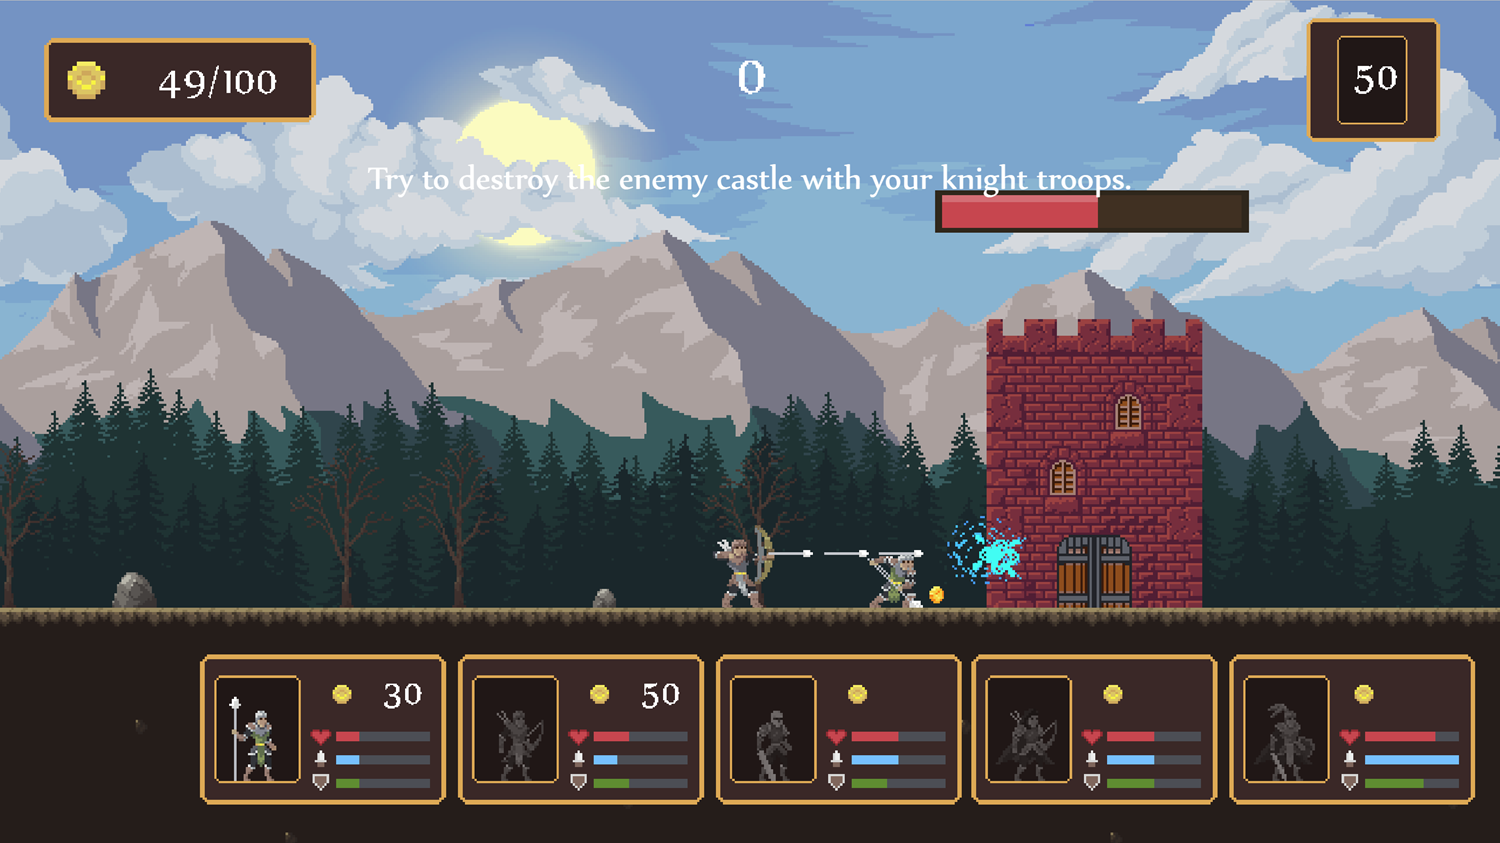 Defense of the Kingdom Game Destroying Castle Screenshot.